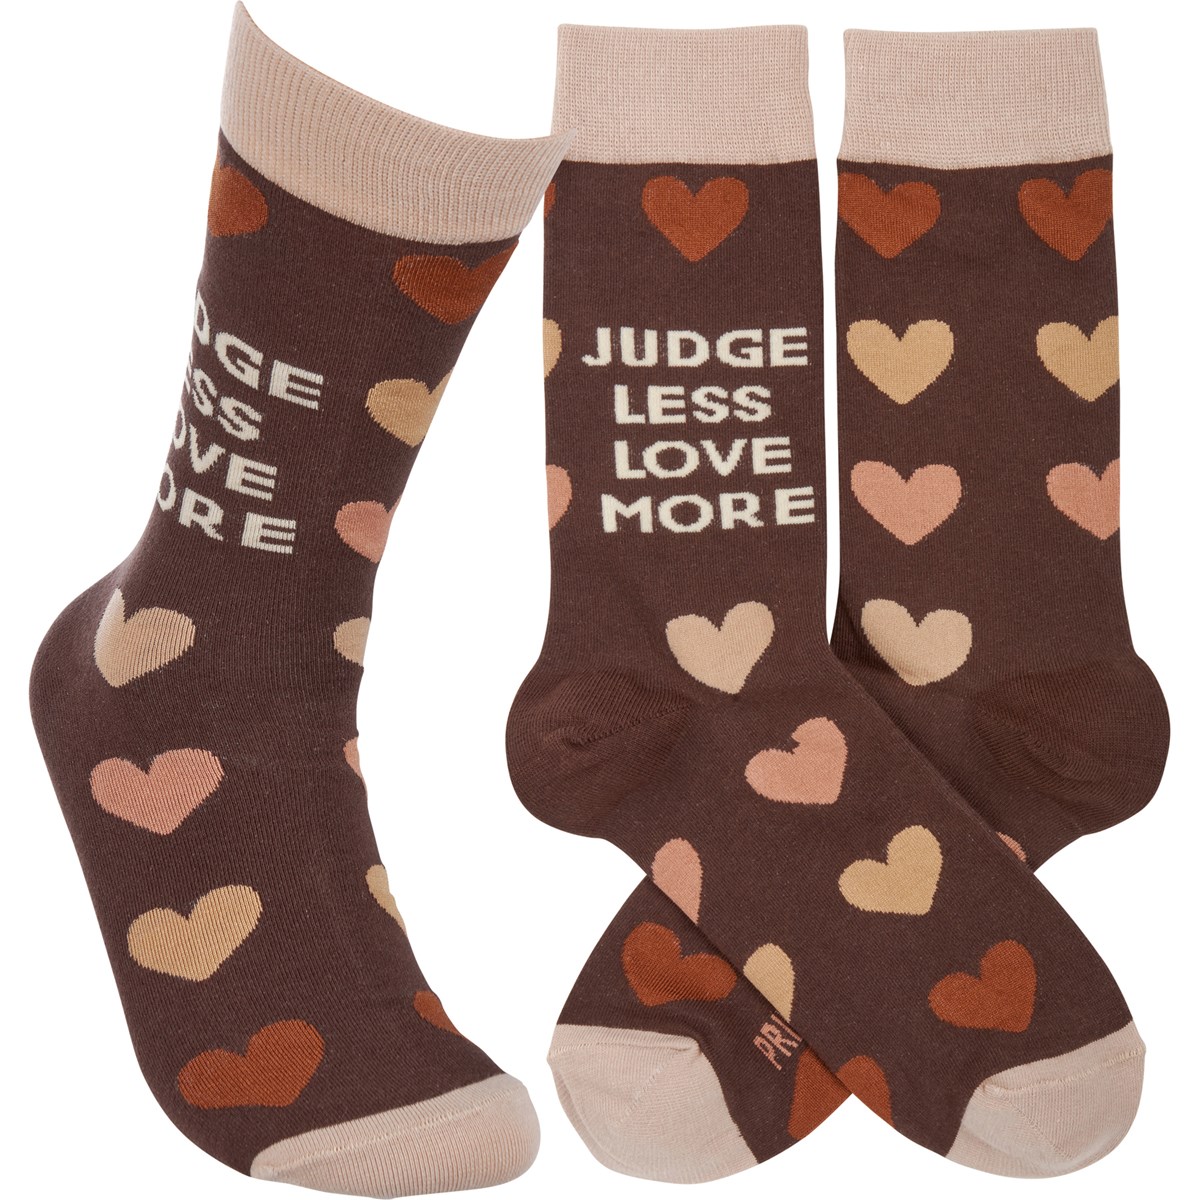 Socks - Judge Less Love More - One Size Fits Most - Cotton, Nylon, Spandex